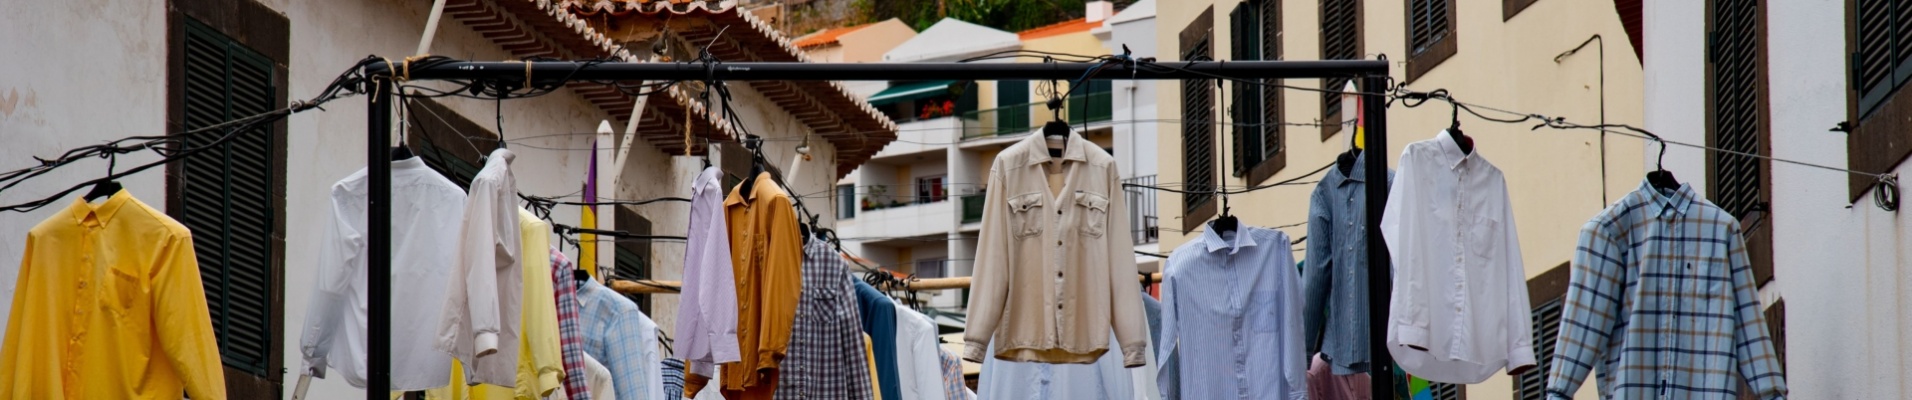 Linge séchant dans les rues de Funchal